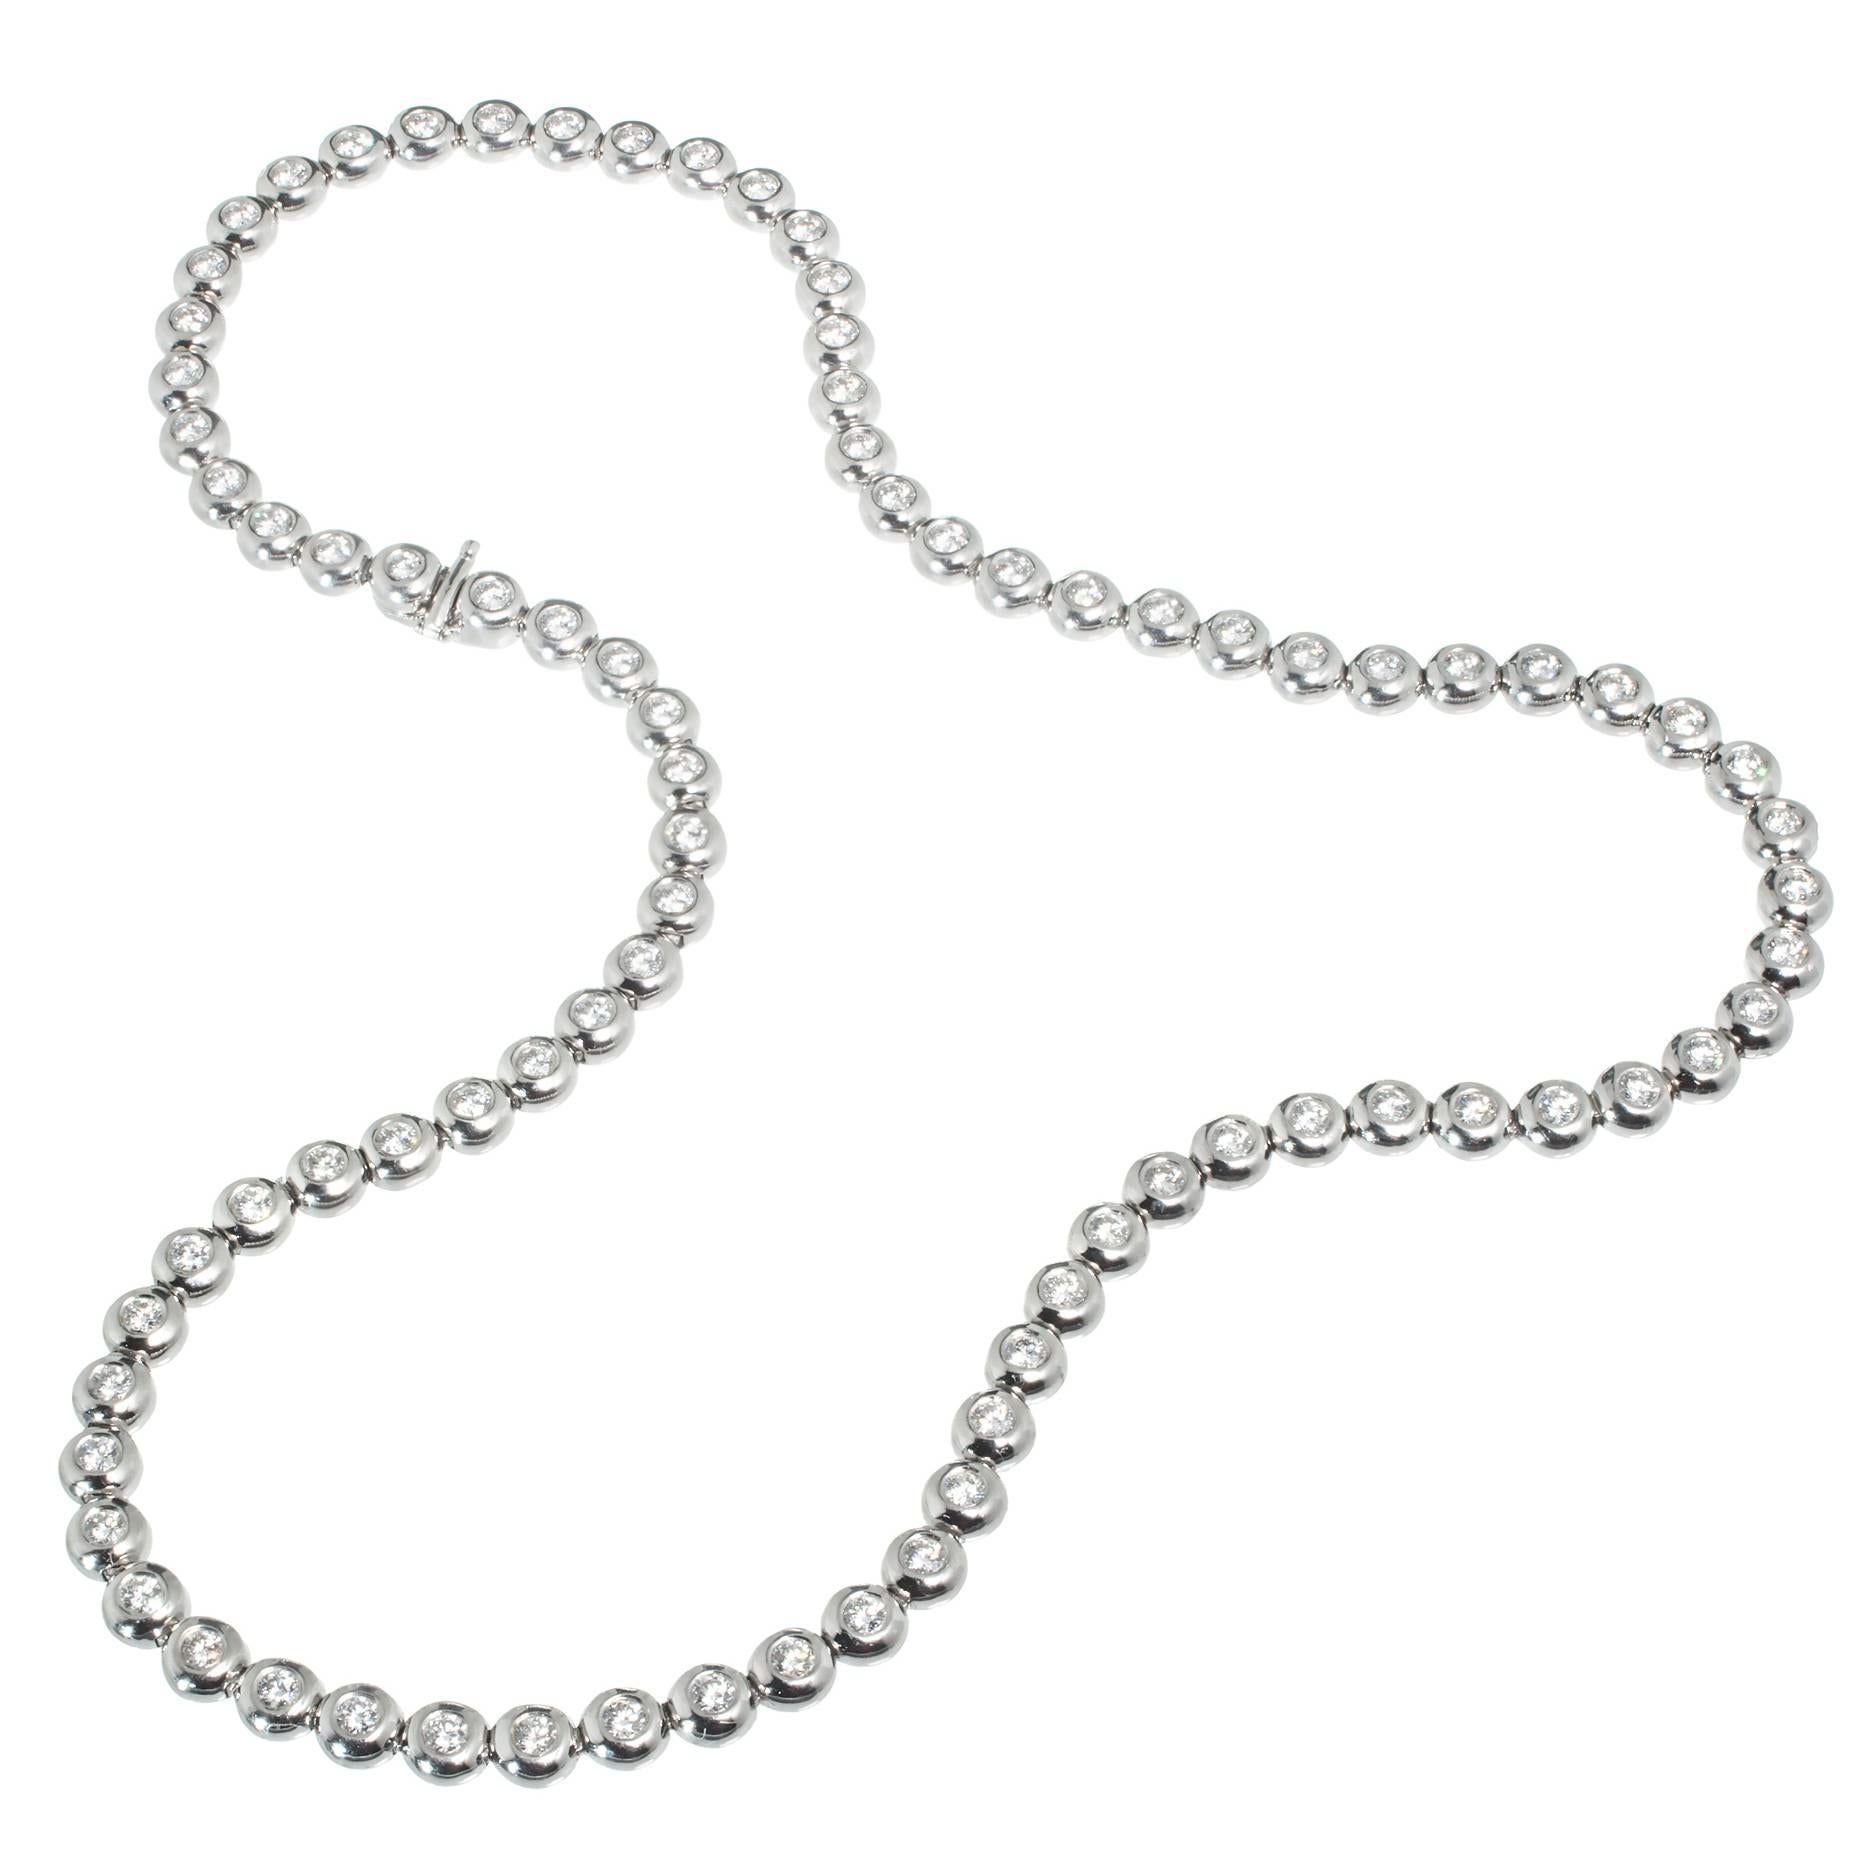 Roman Malakov, 51.48 Carat Diamond Necklace For Sale at 1stdibs | Diamond  necklace tiffany, Diamond, Fancy diamonds